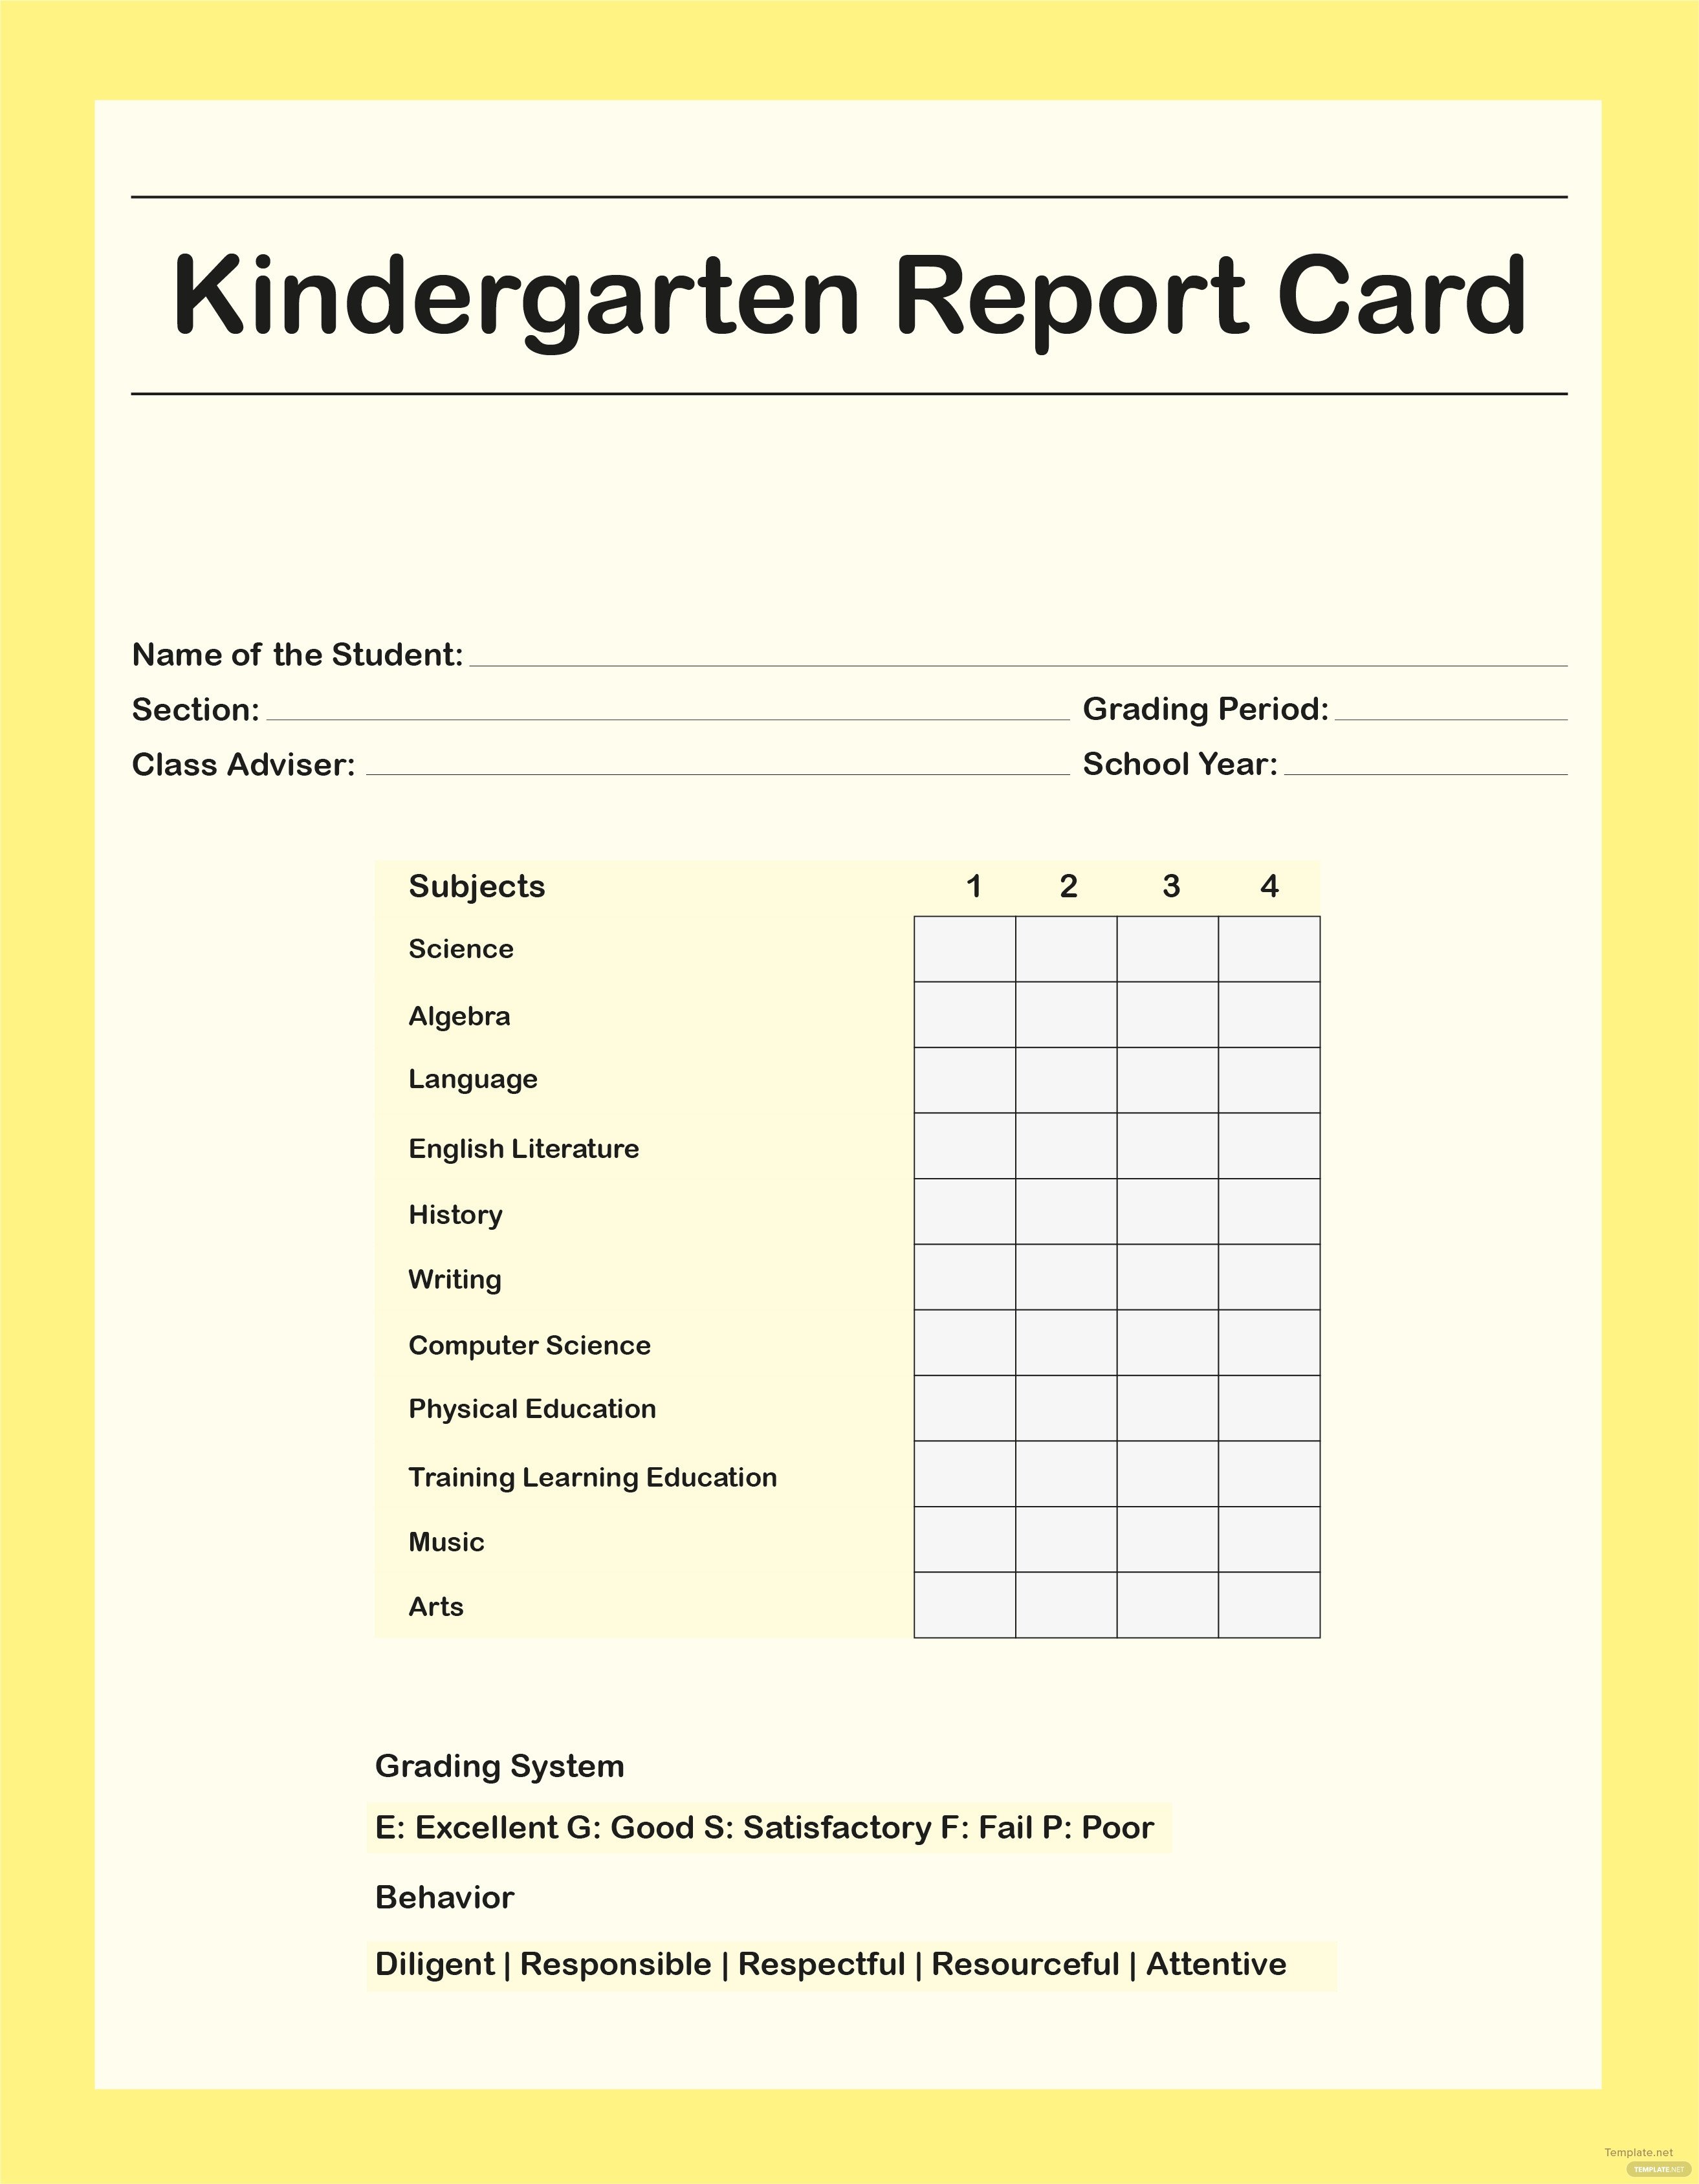 Free Kindergarten Report Card Template in Adobe shop